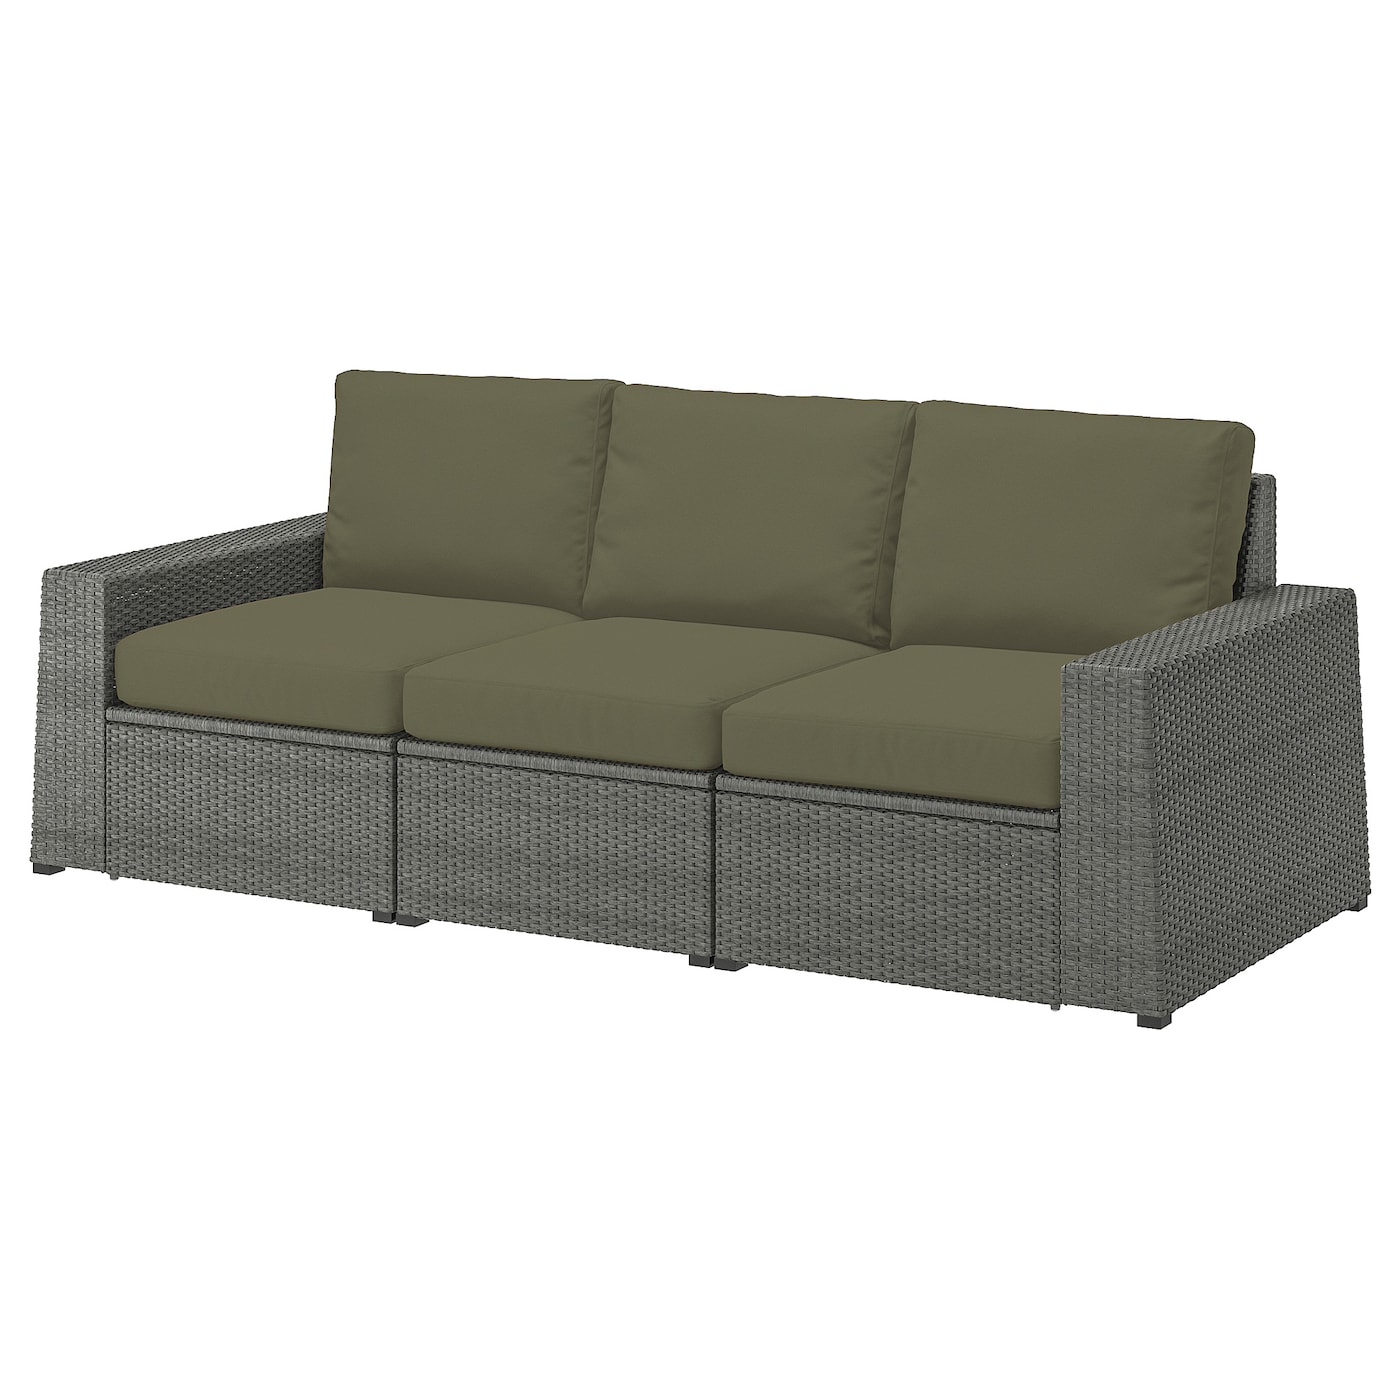 3-местный модульный диван - IKEA SOLLERÖN/SOLLERON/СОЛЛЕРОН ИКЕА, 88х82х223 см, темно-зеленый/серый